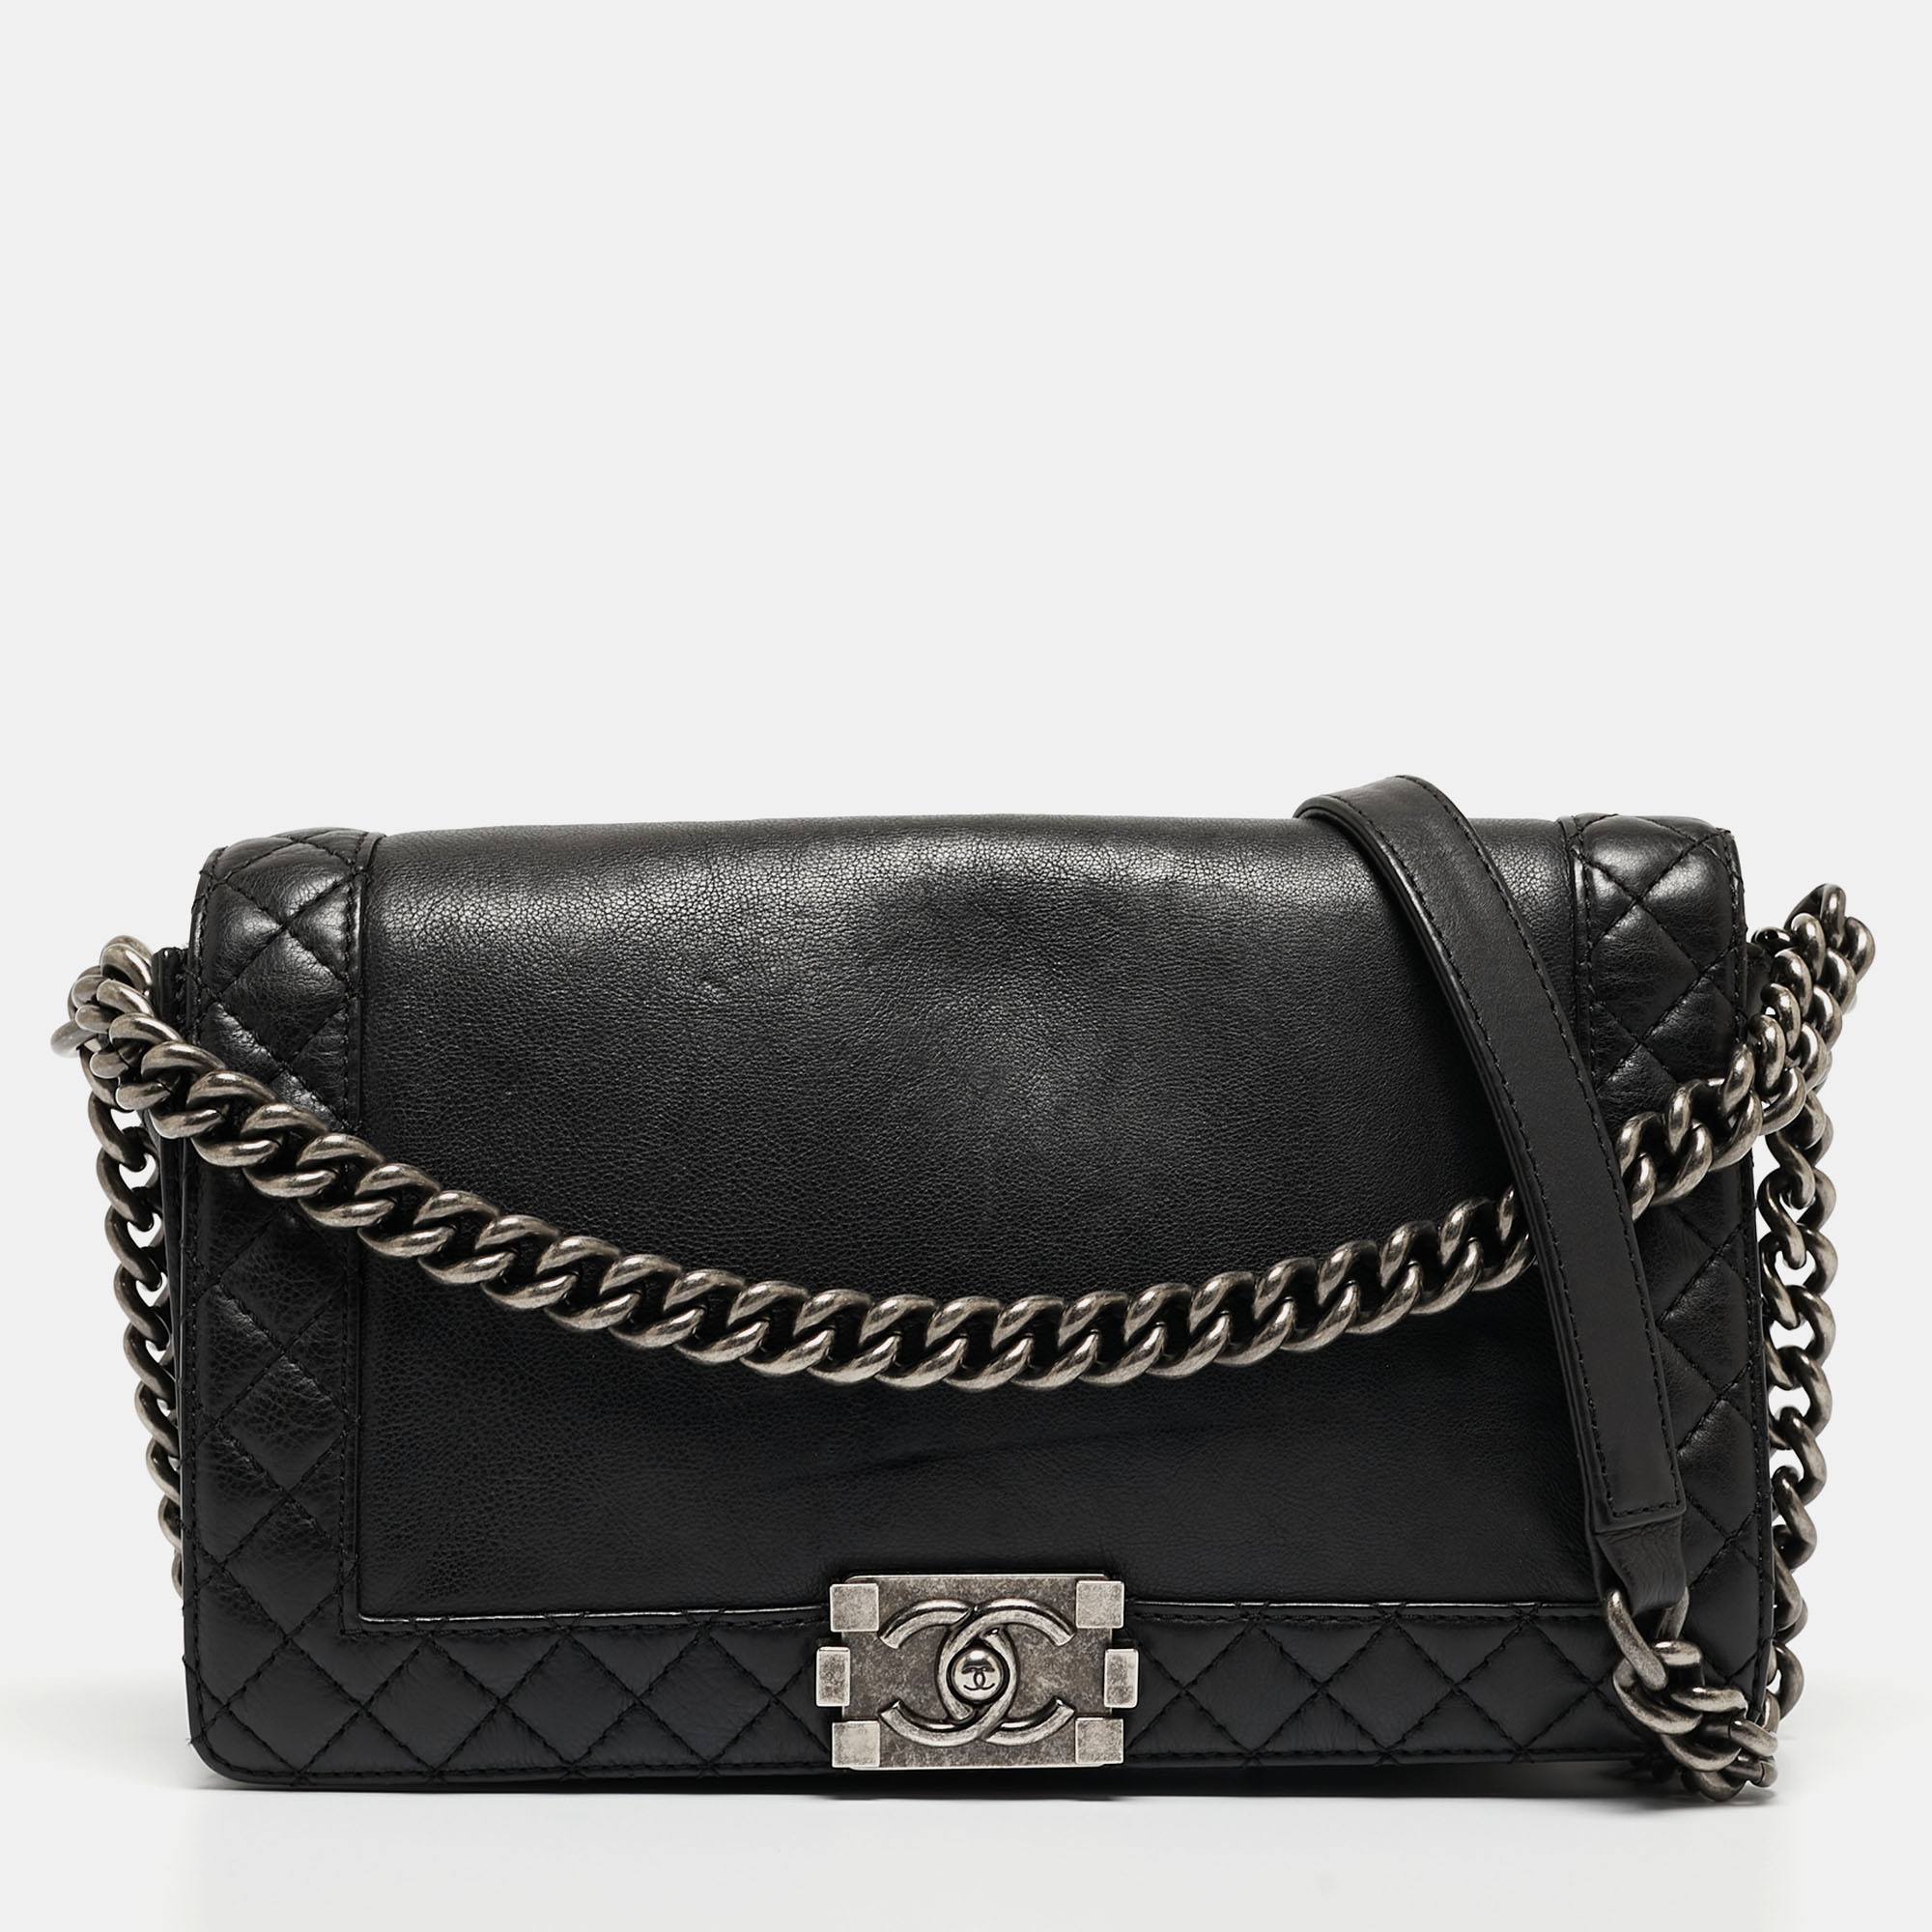 Chanel Black Leather Medium Boy Reverso Bag